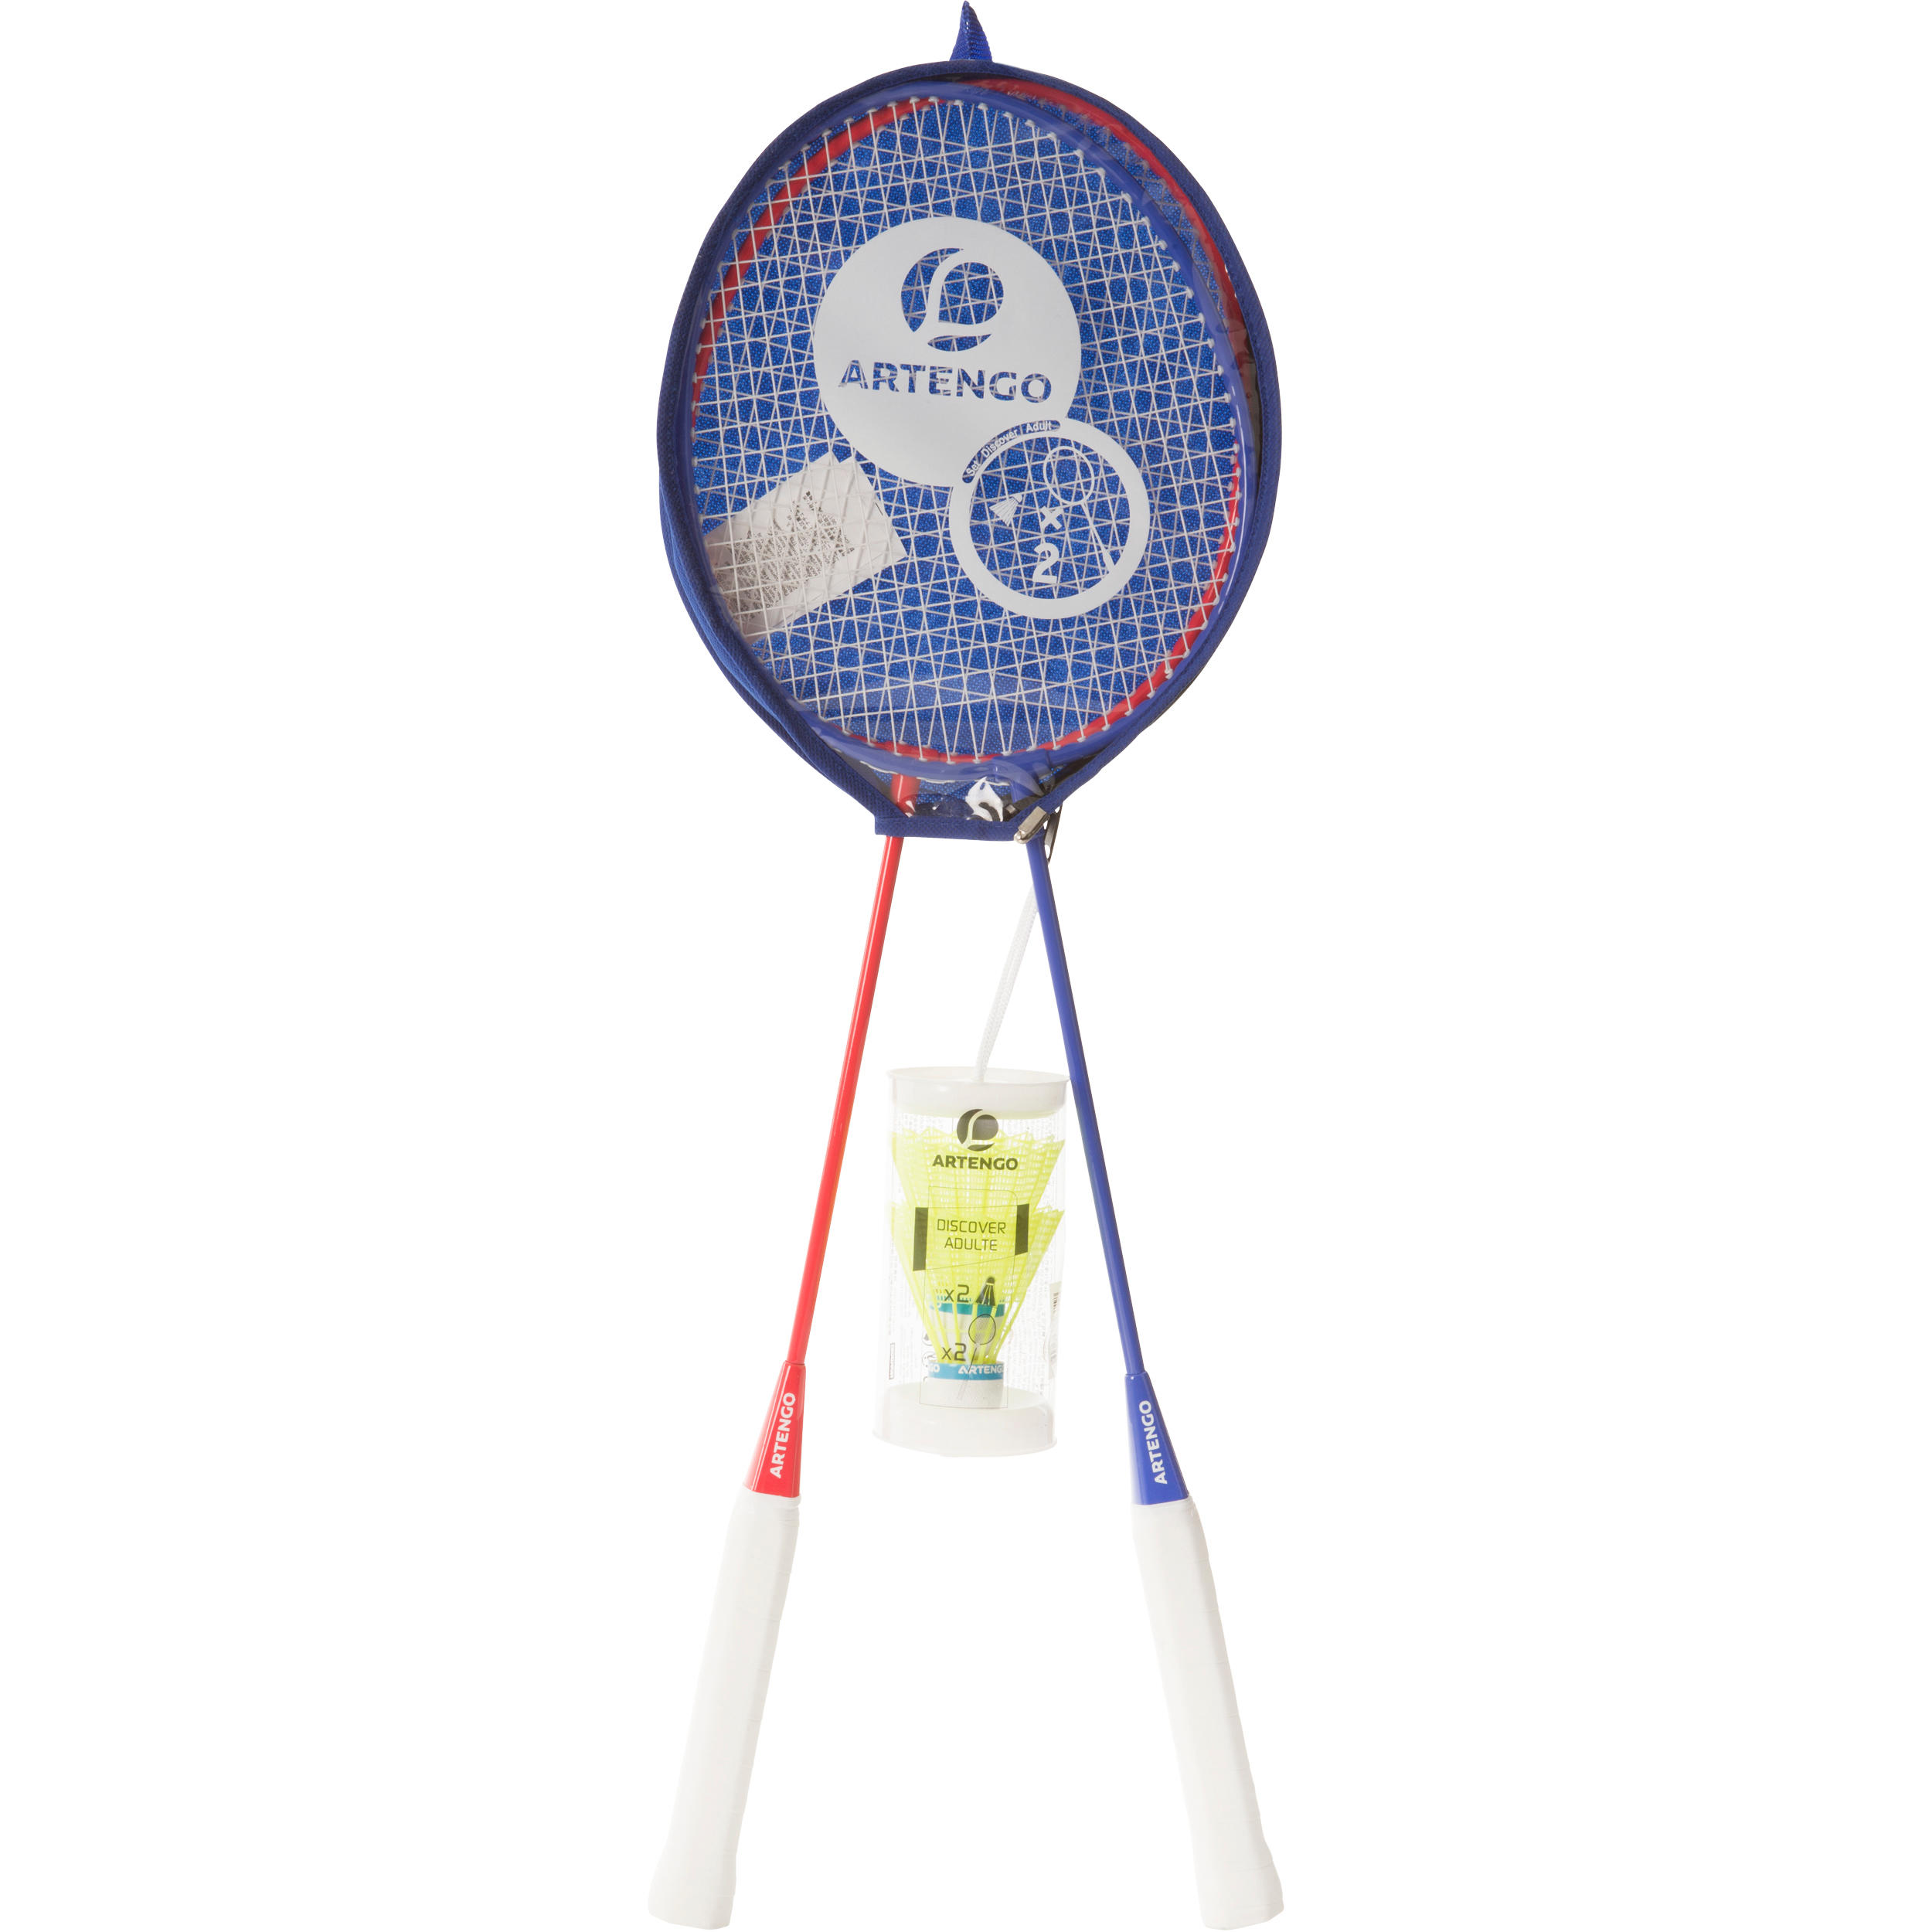 br 700 badminton racket